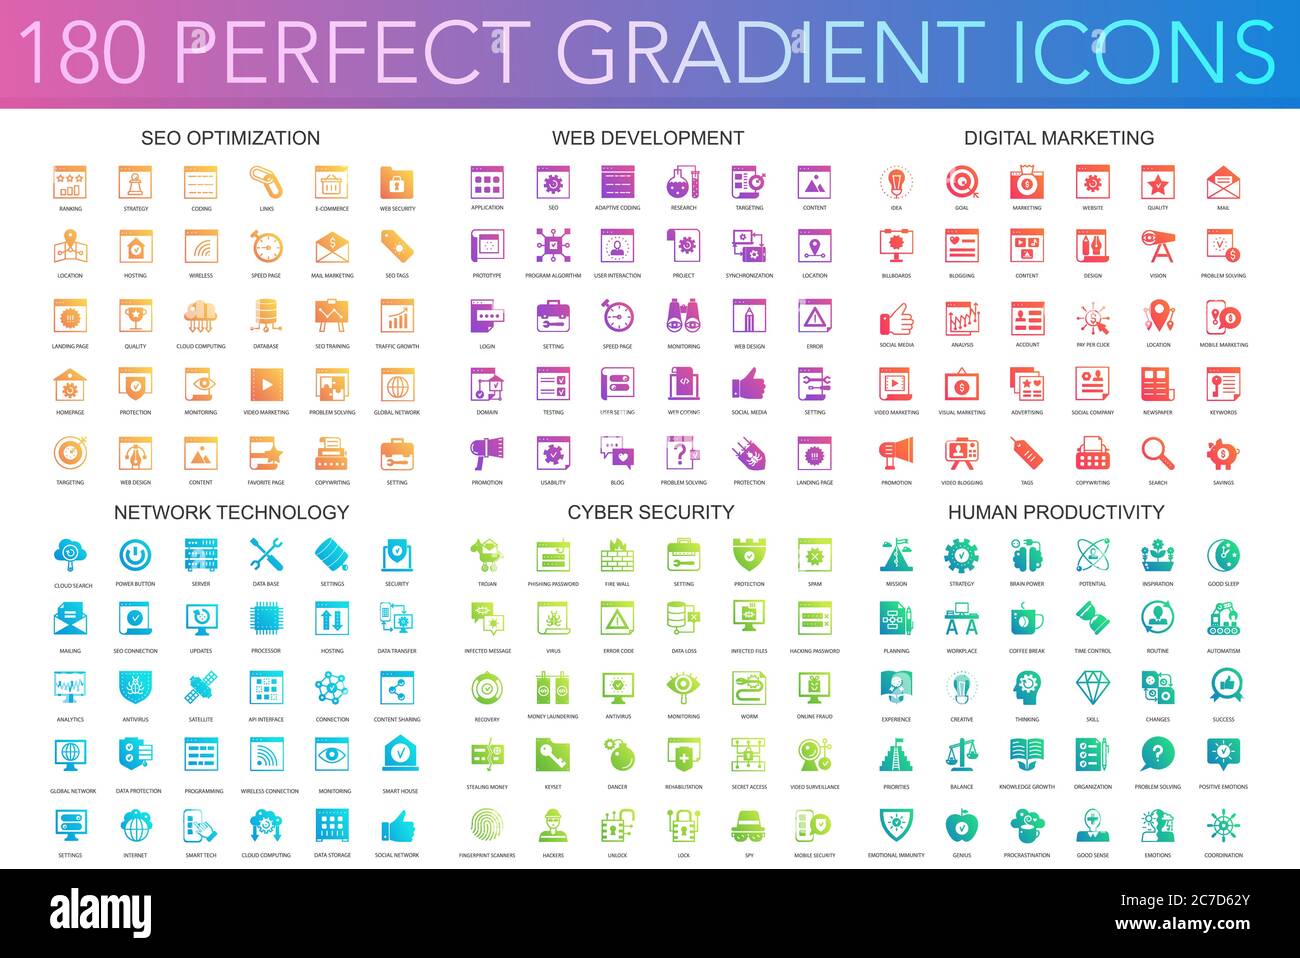 180 trendy perfect gradient icons set seo optimization, web development, digital marketing, network technology, cyber security, human productivity Stock Vector